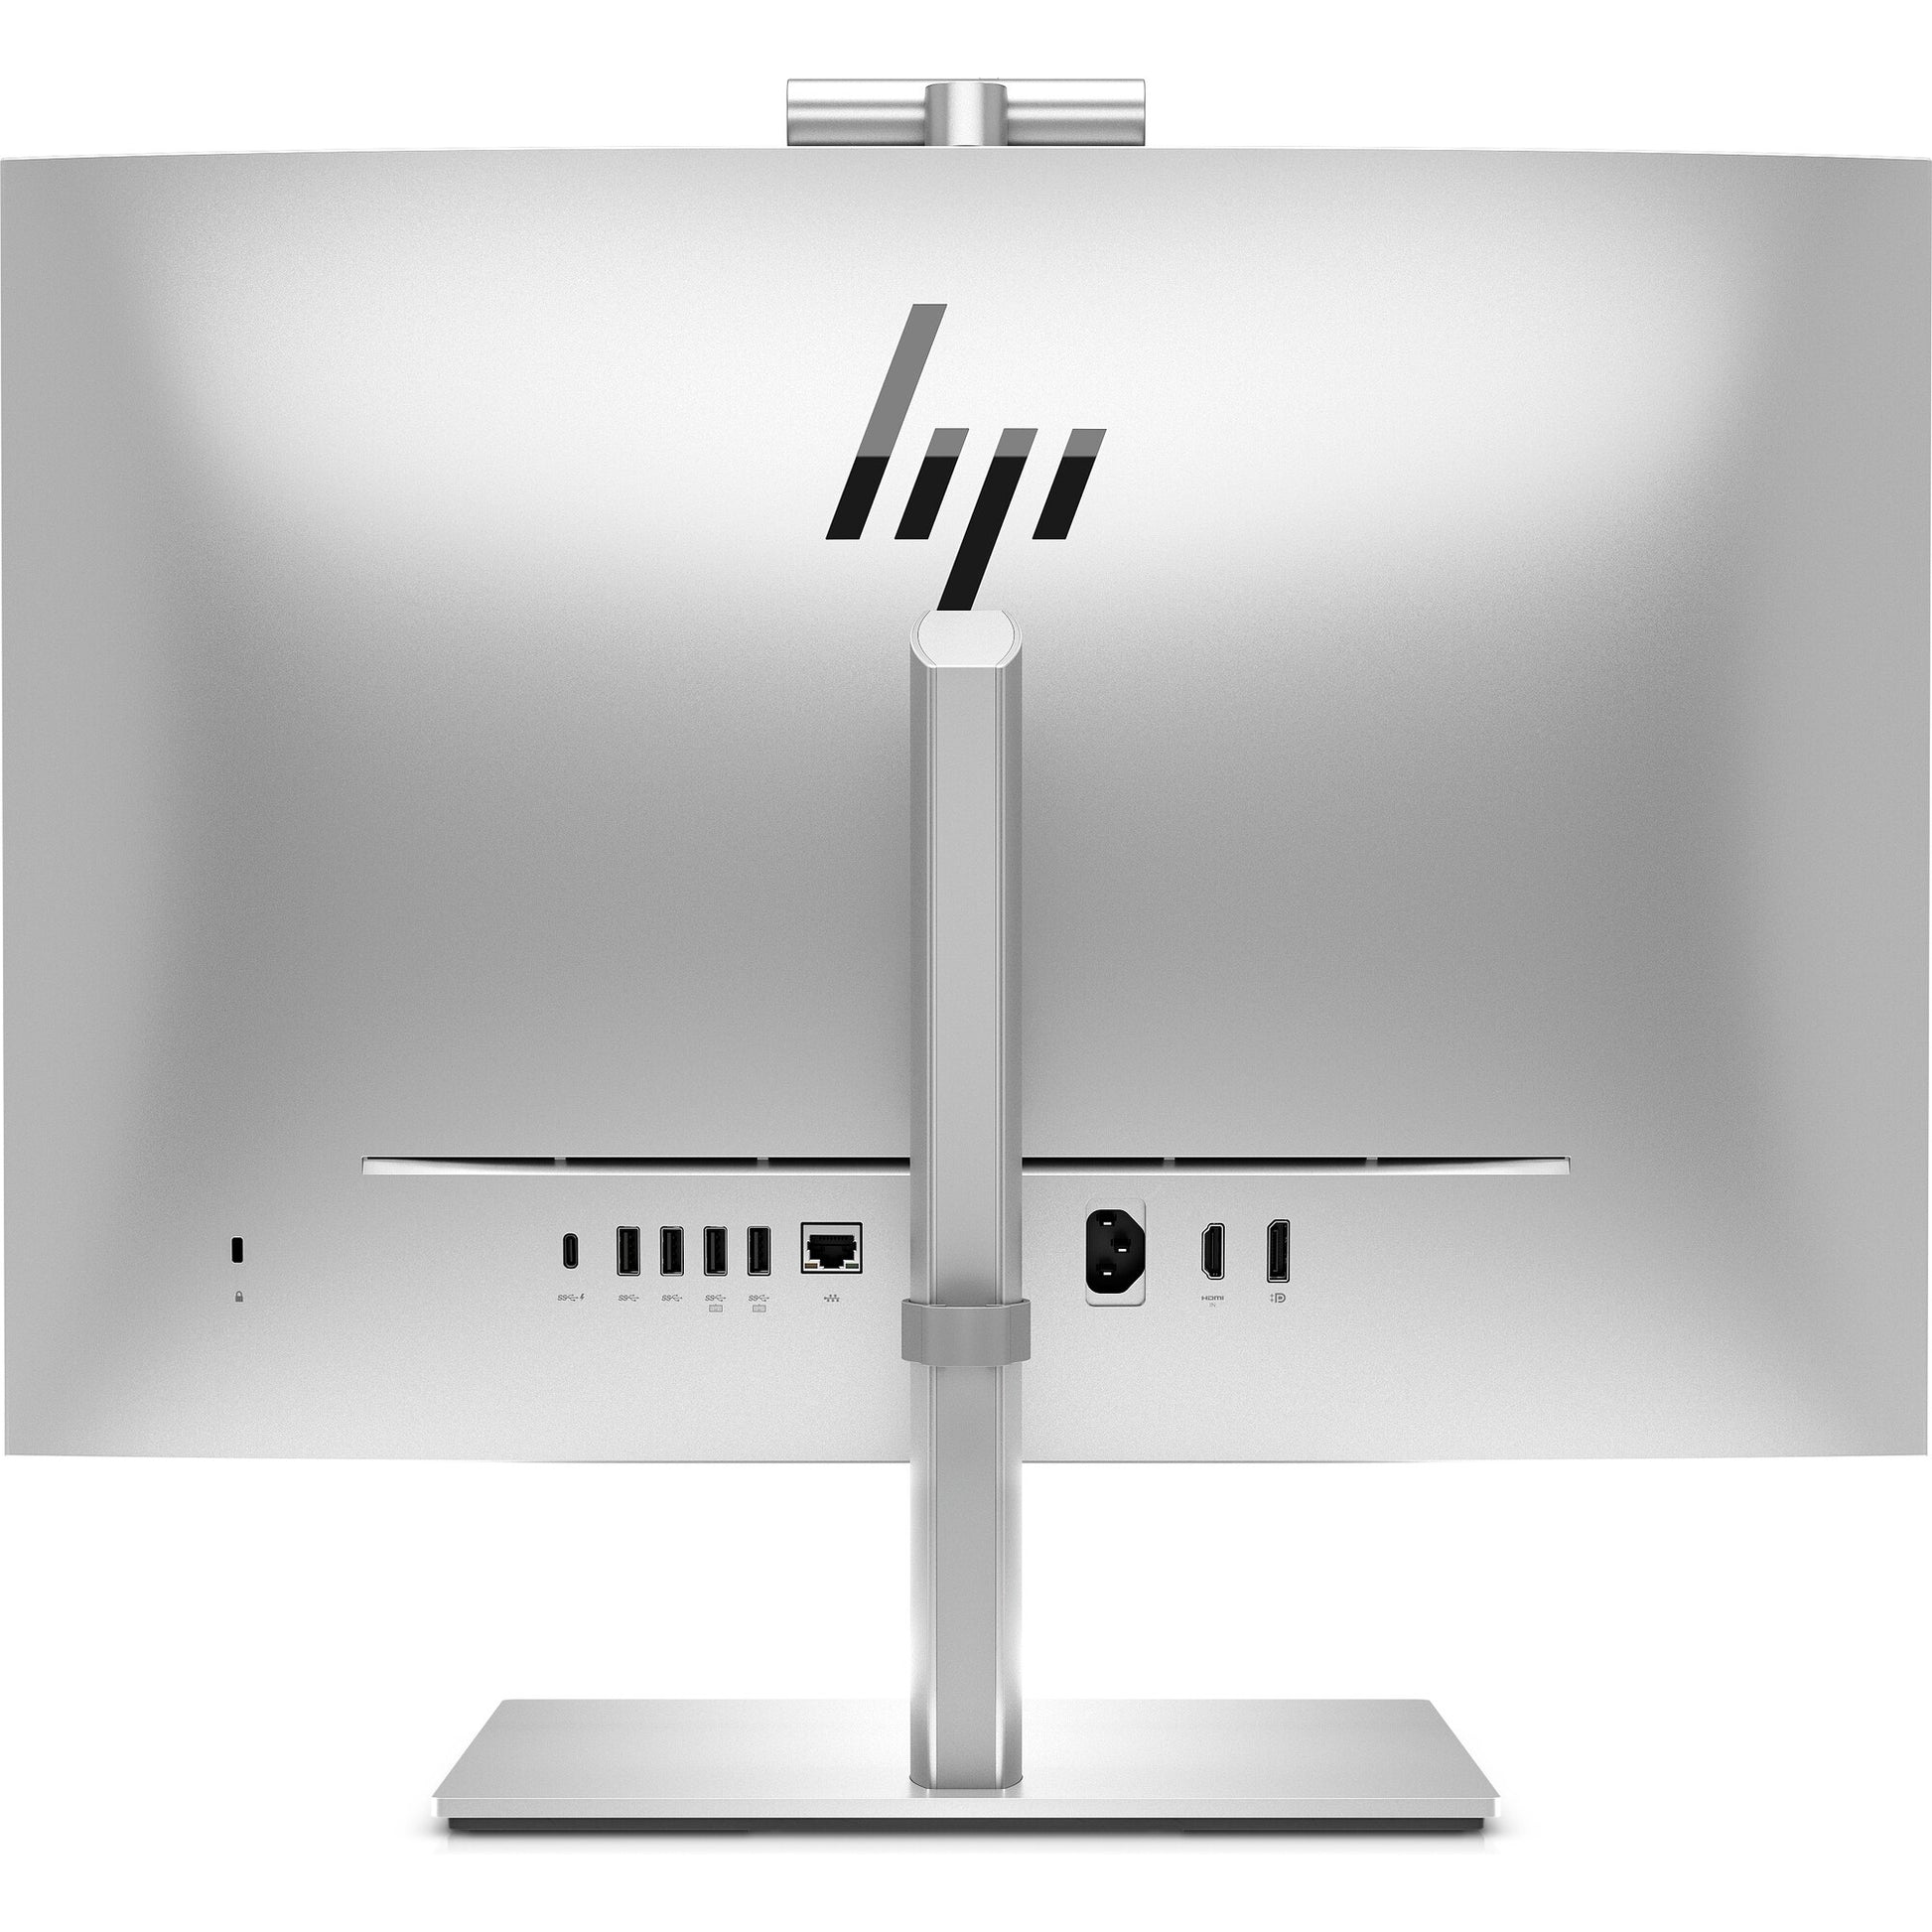 HP EliteOne 840 G9 23.8 inch All-in-One Desktop PC